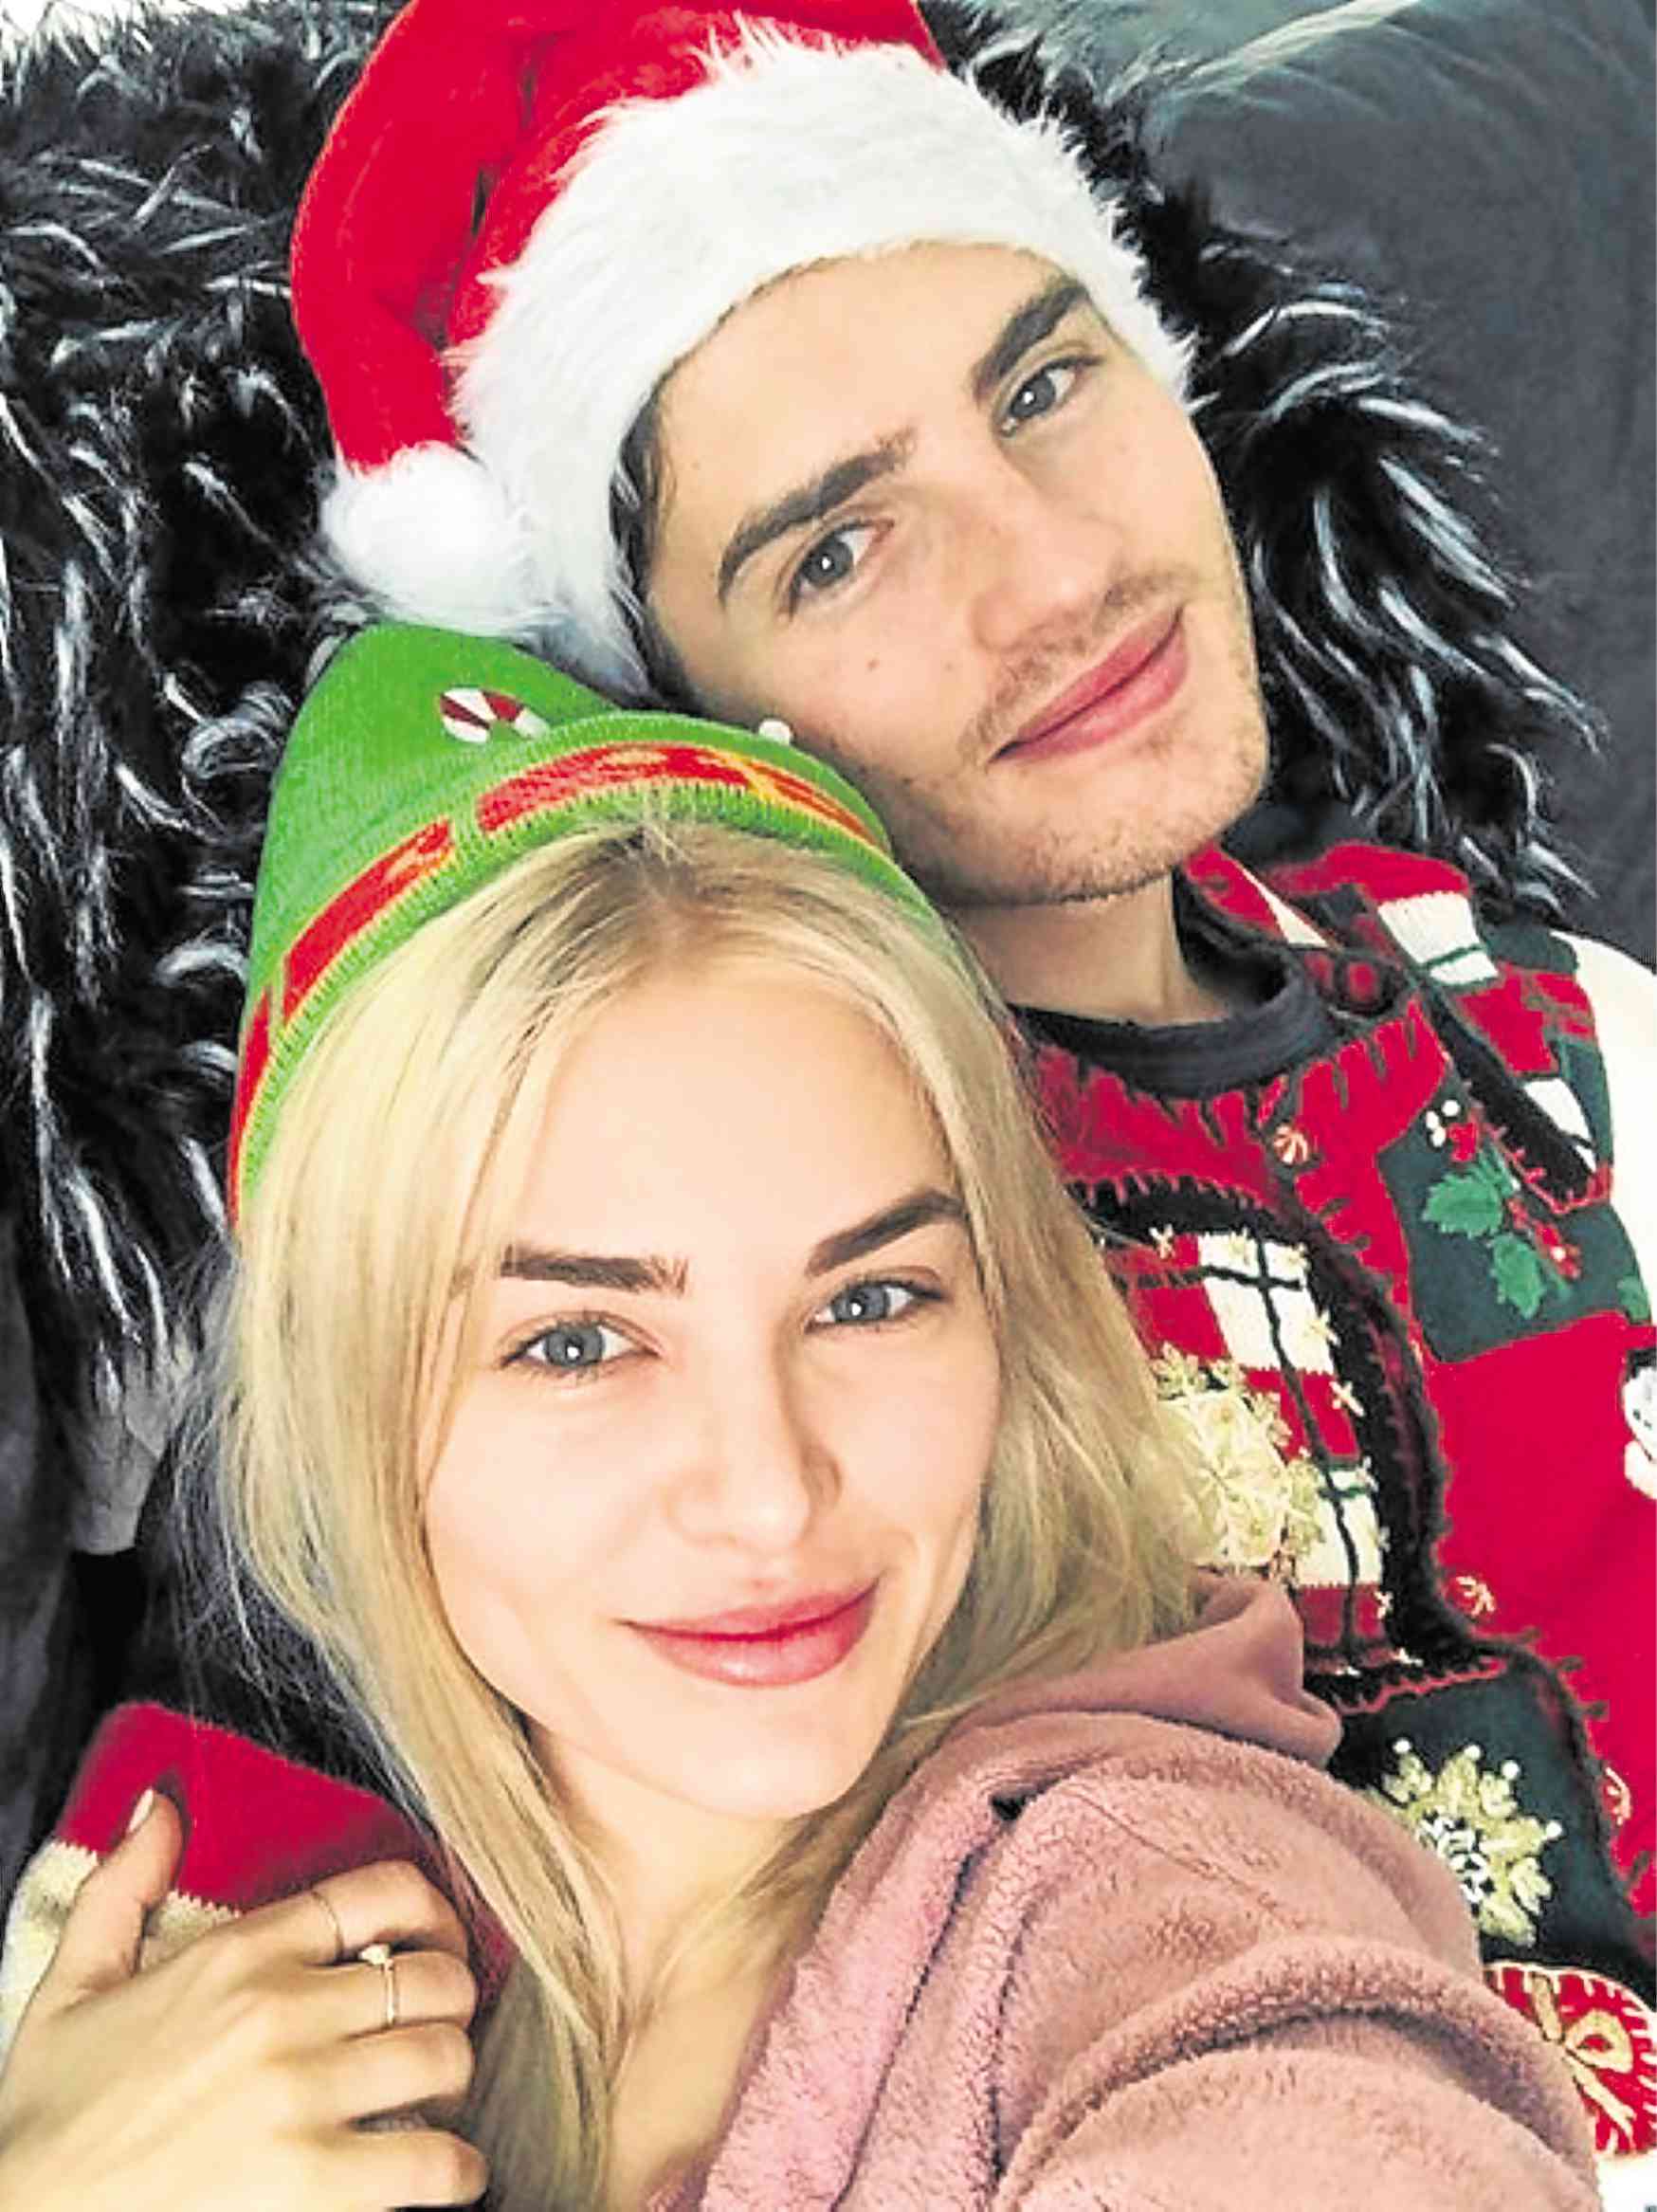 Early Christmas celebration for Gregg Sulkin, new girlfriend | Inquirer ...